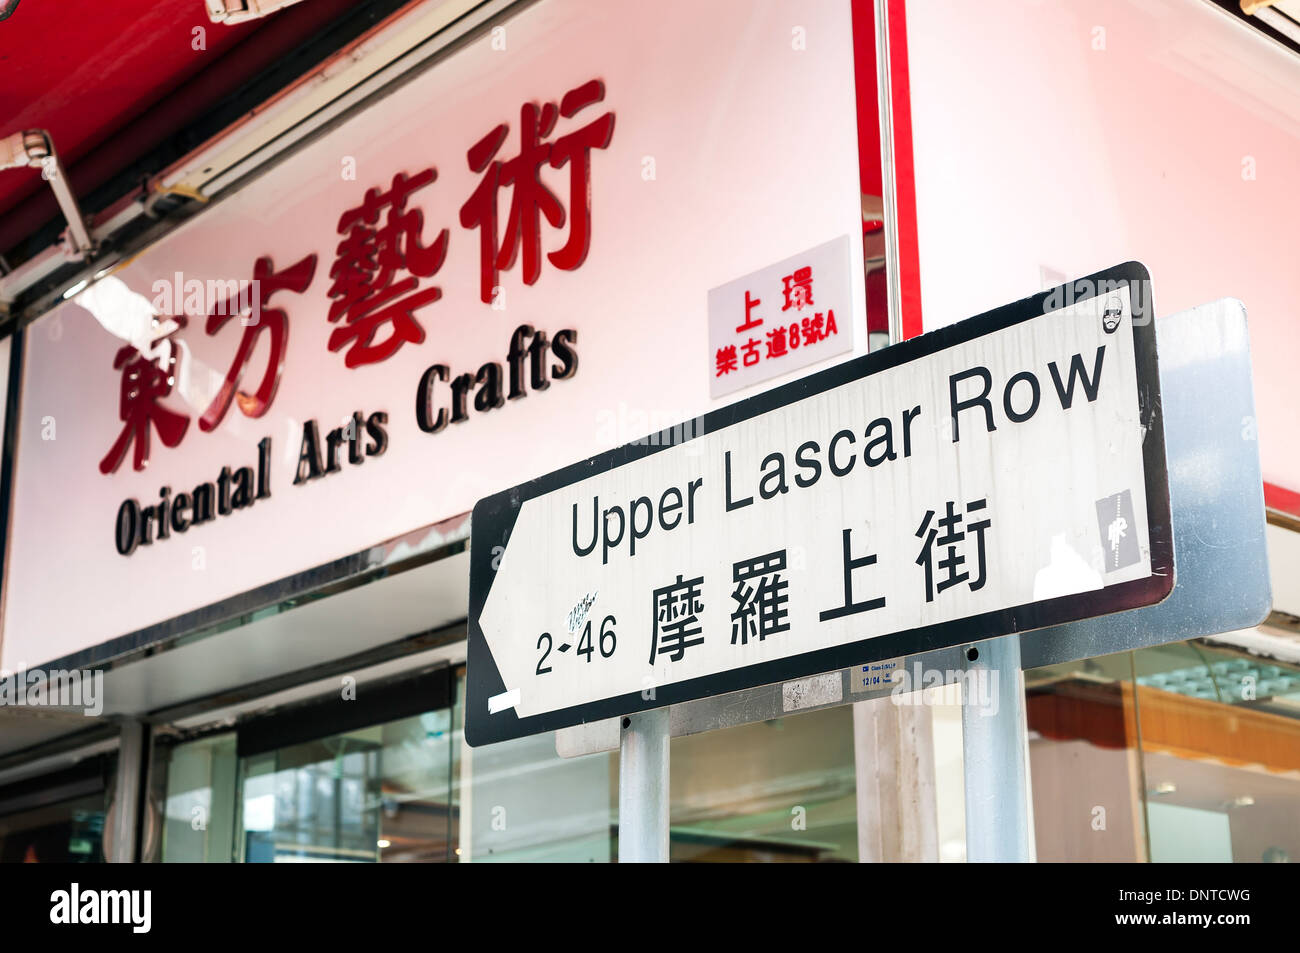 Upper Lascar Row antiques market street sign, Hong Kong Stock Photo